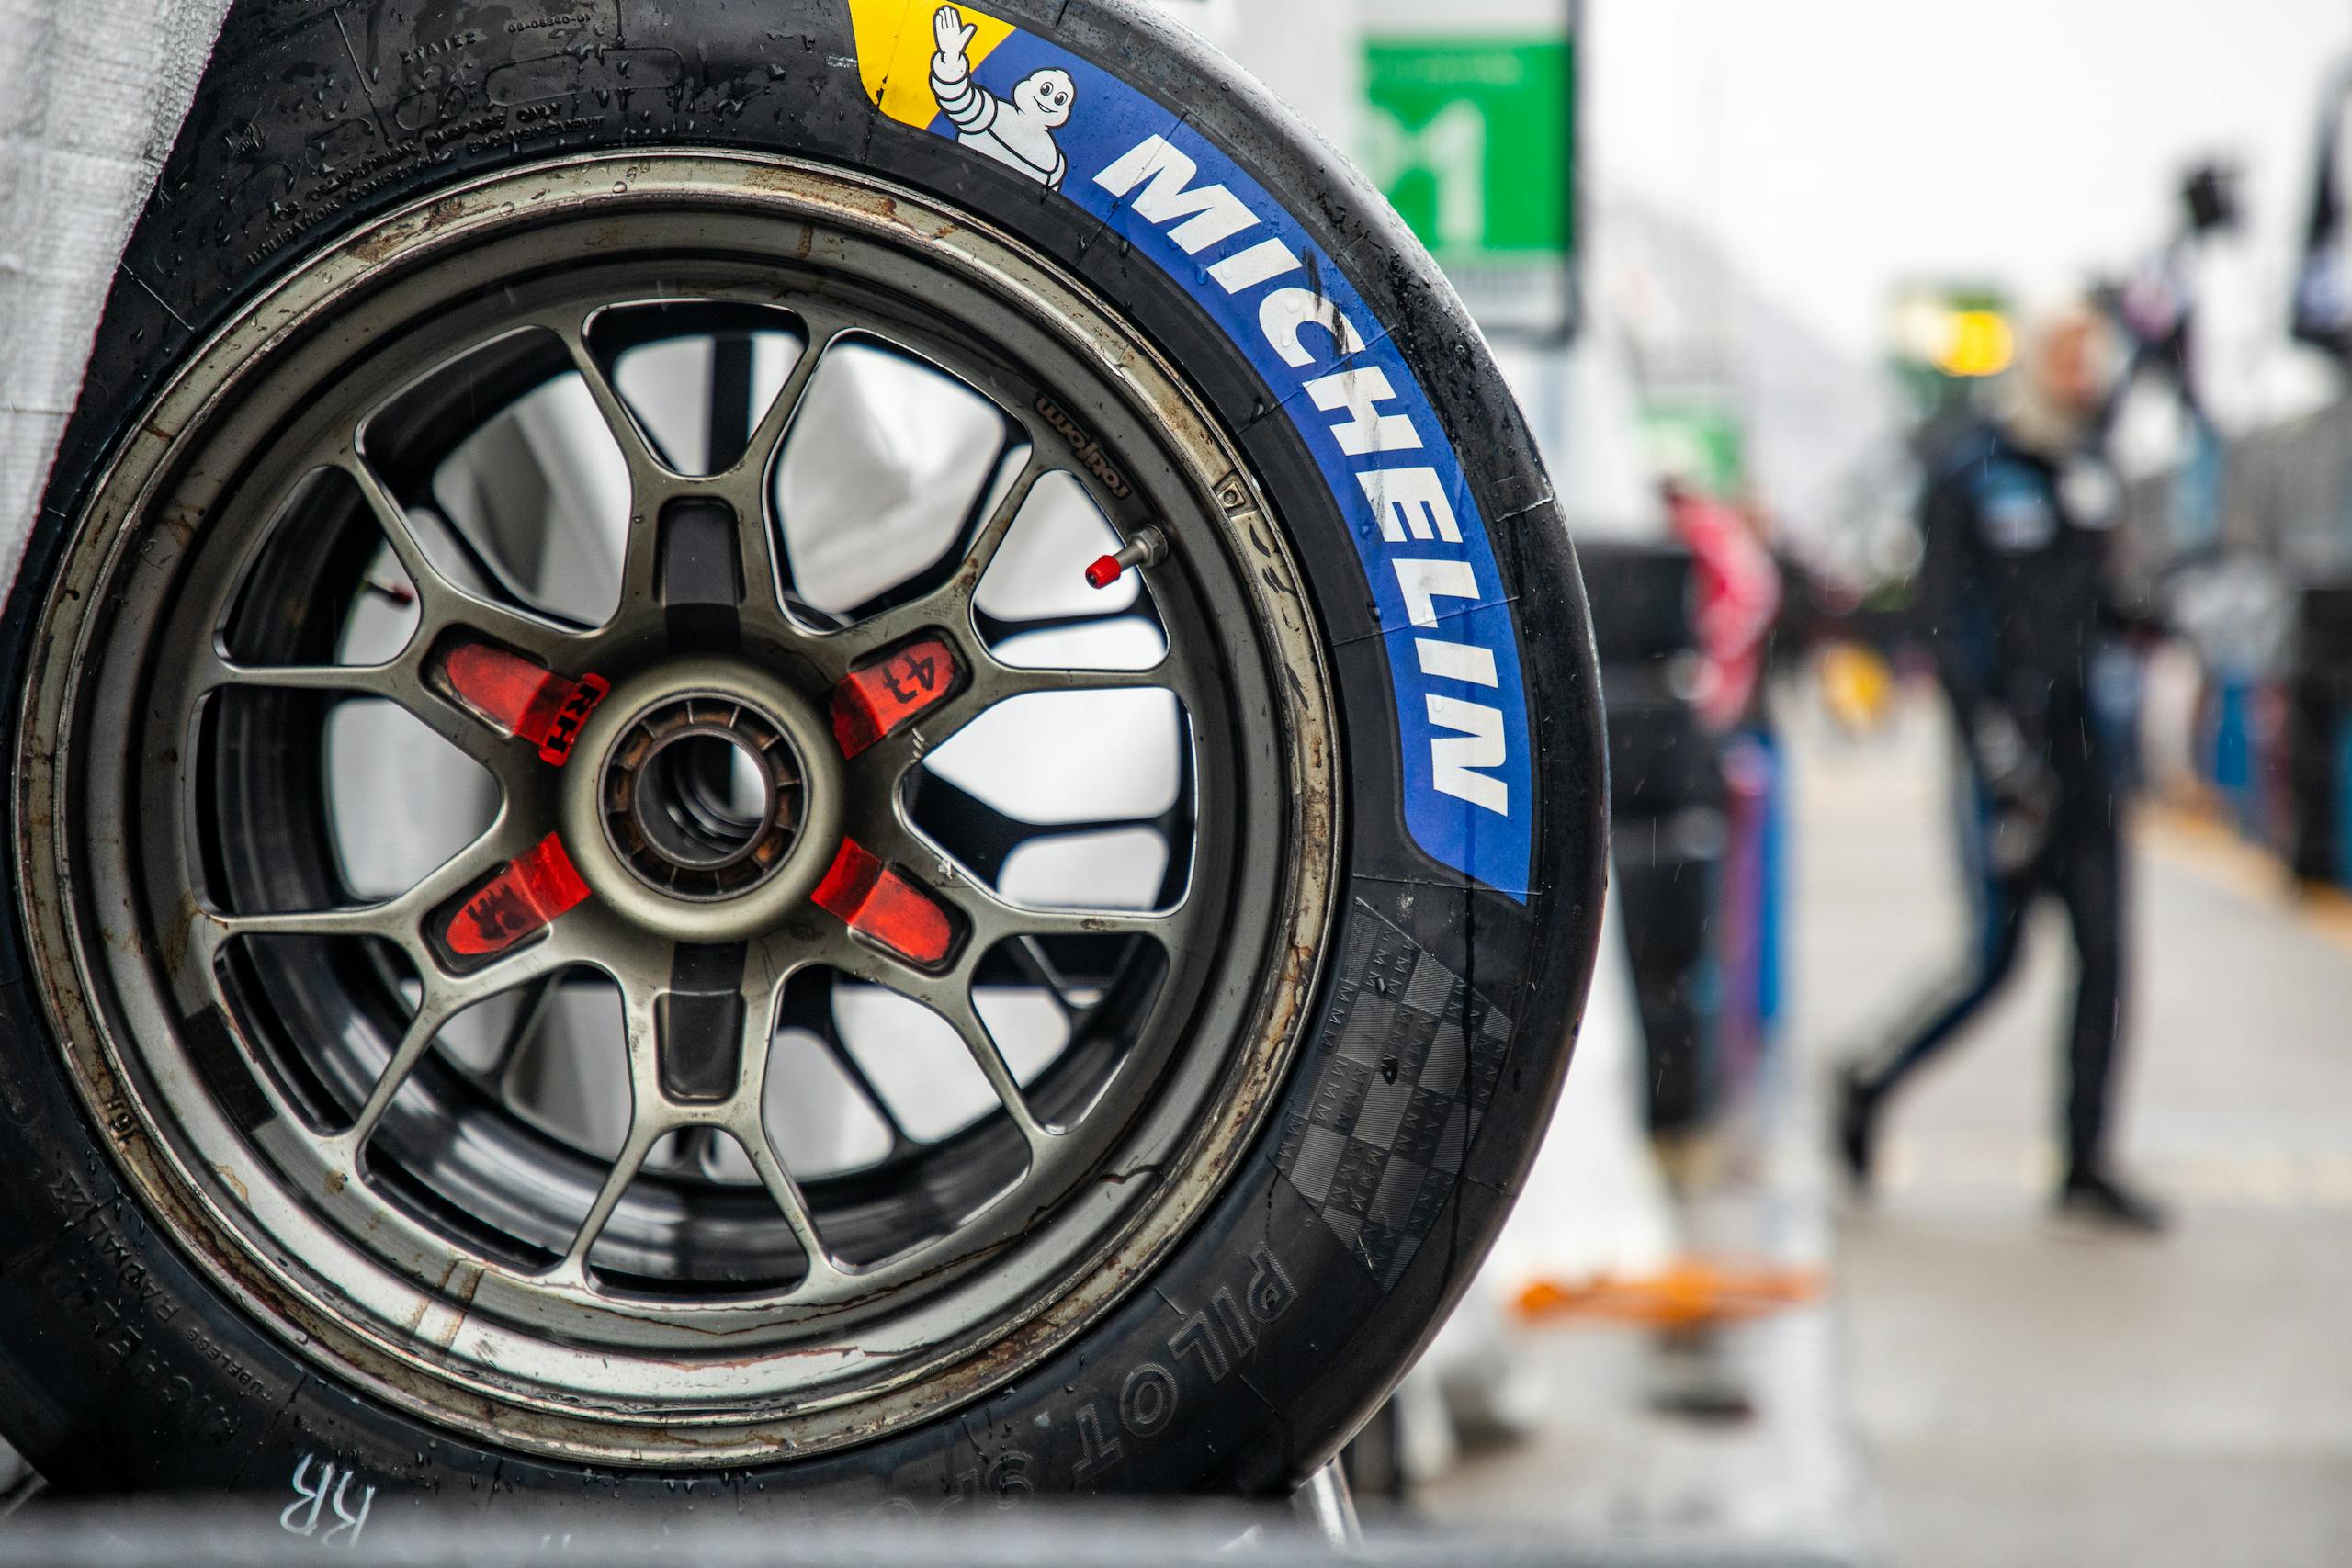 2022 Rolex 24 at Daytona wheel tire detail